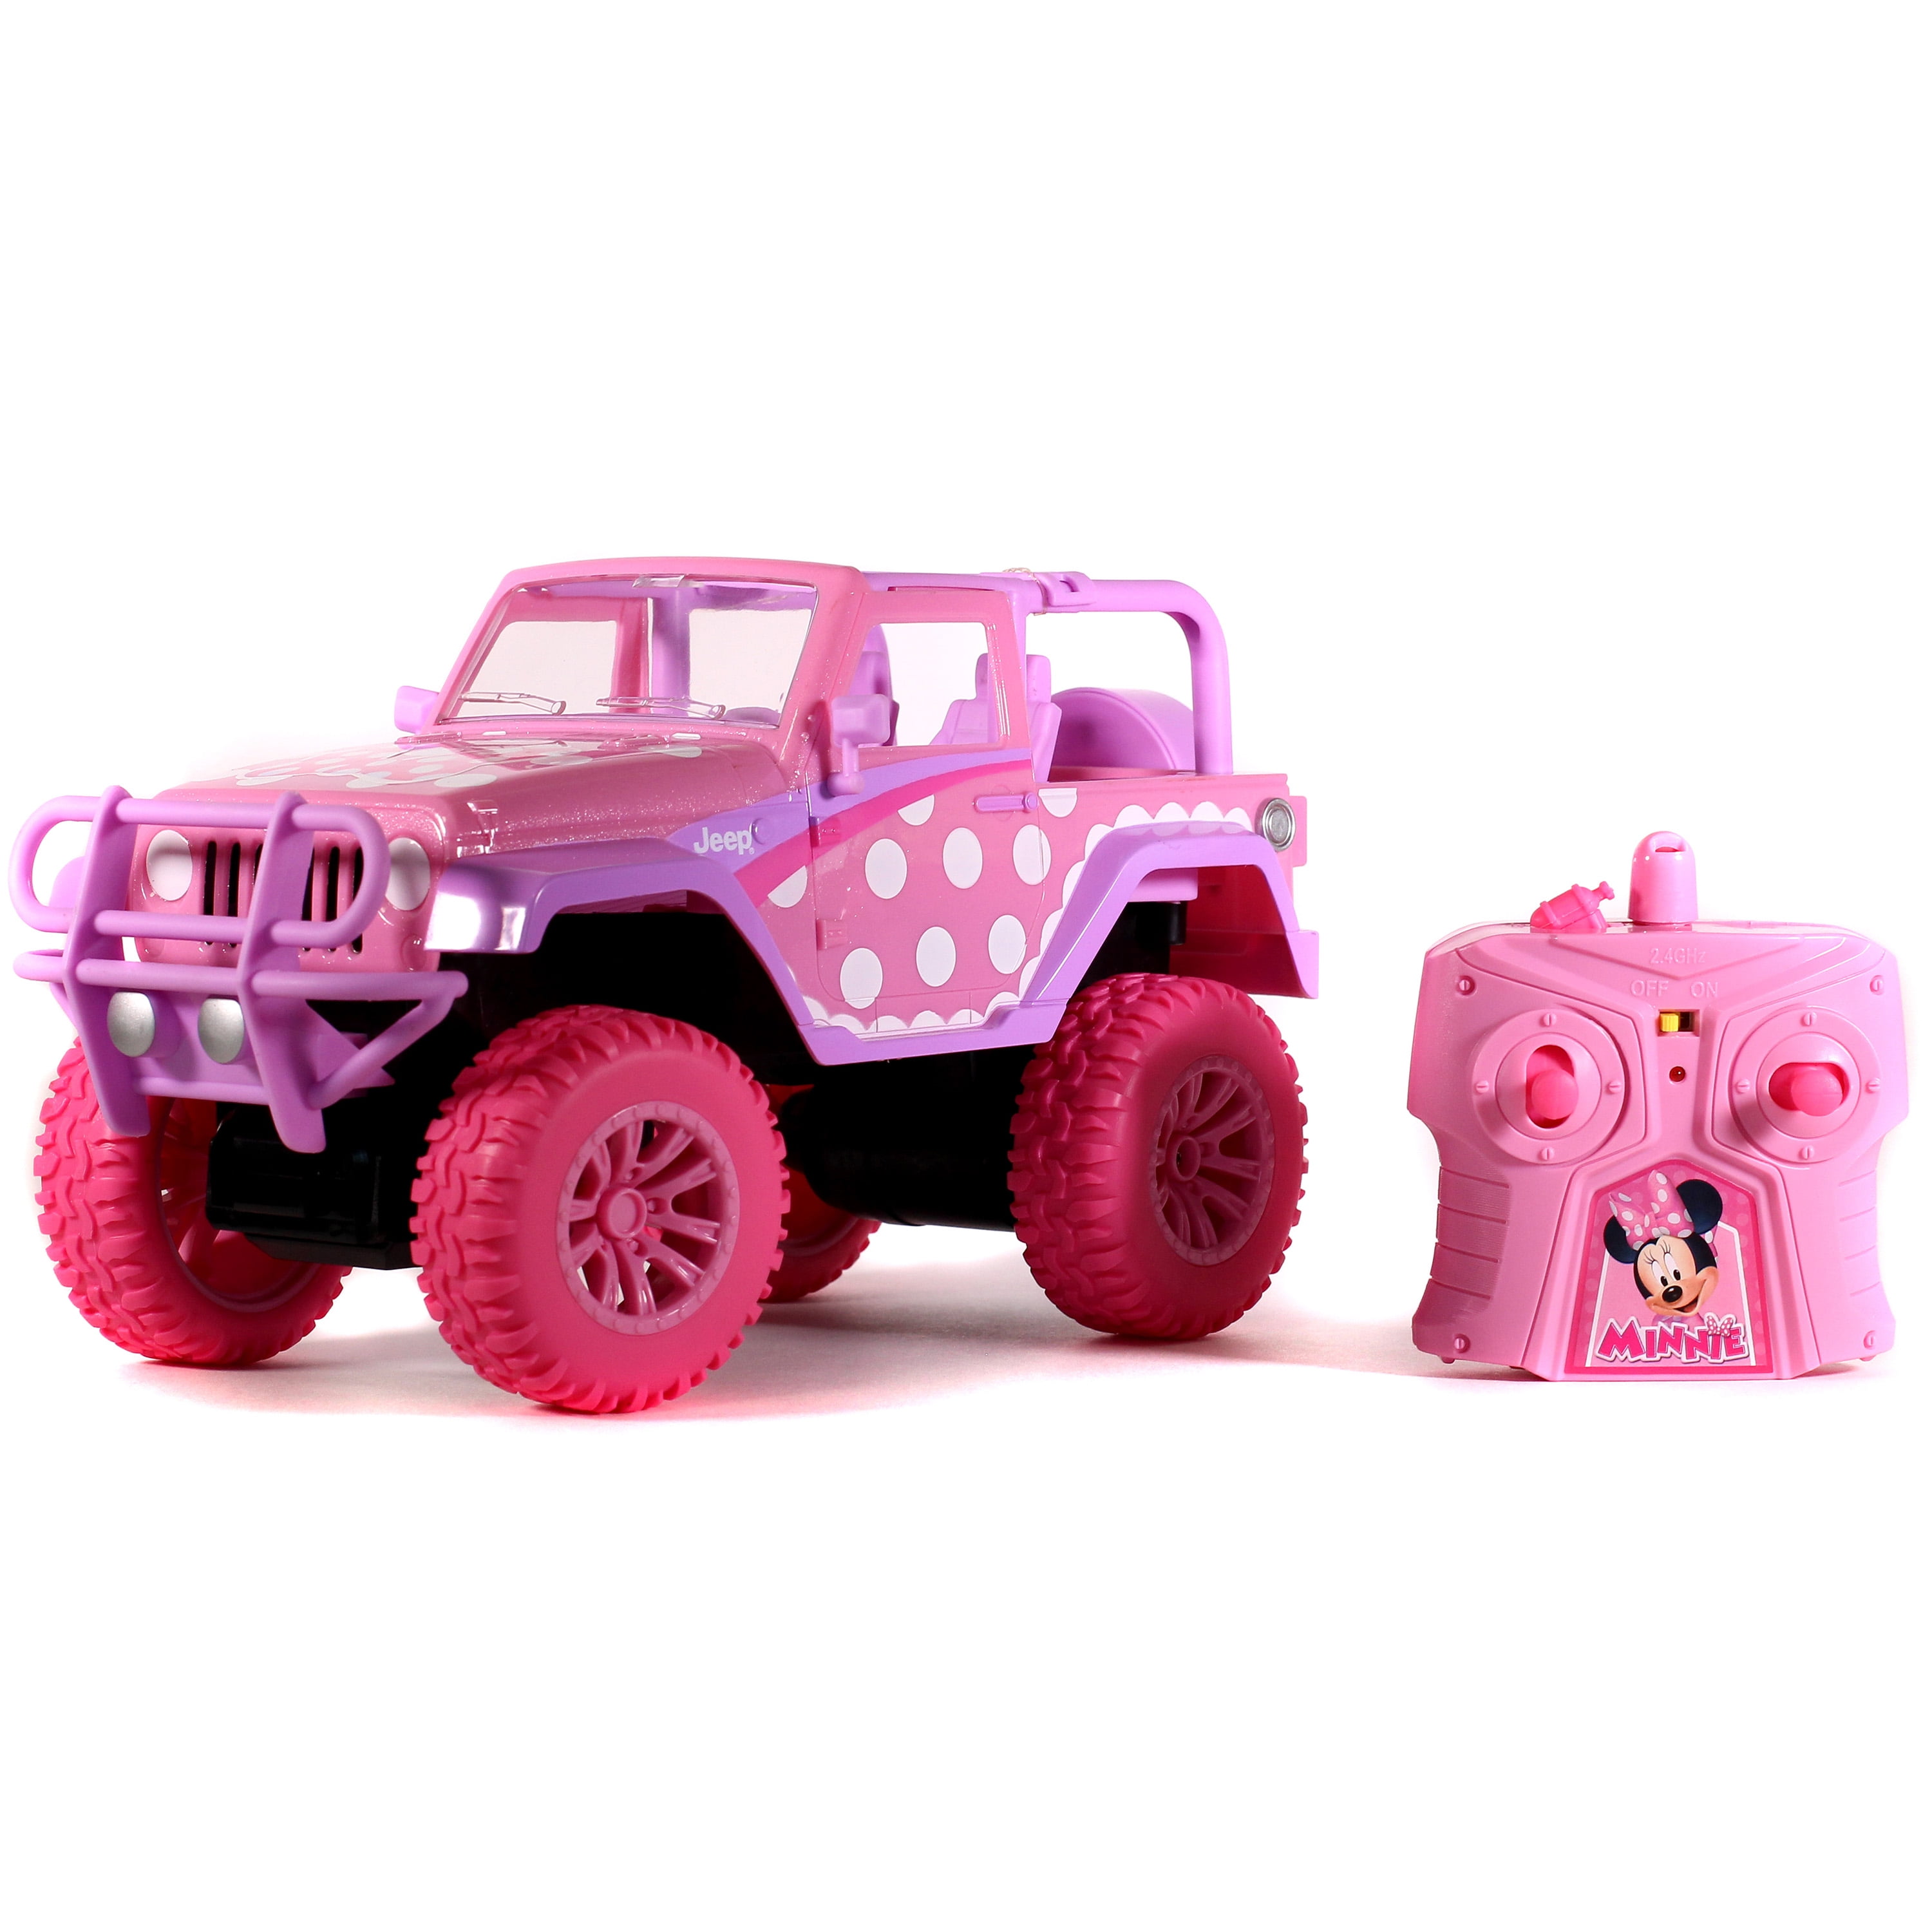 Jada Toys GIRLMAZING Big Foot Jeep R/C Vehicle 1:16 Scale Pink